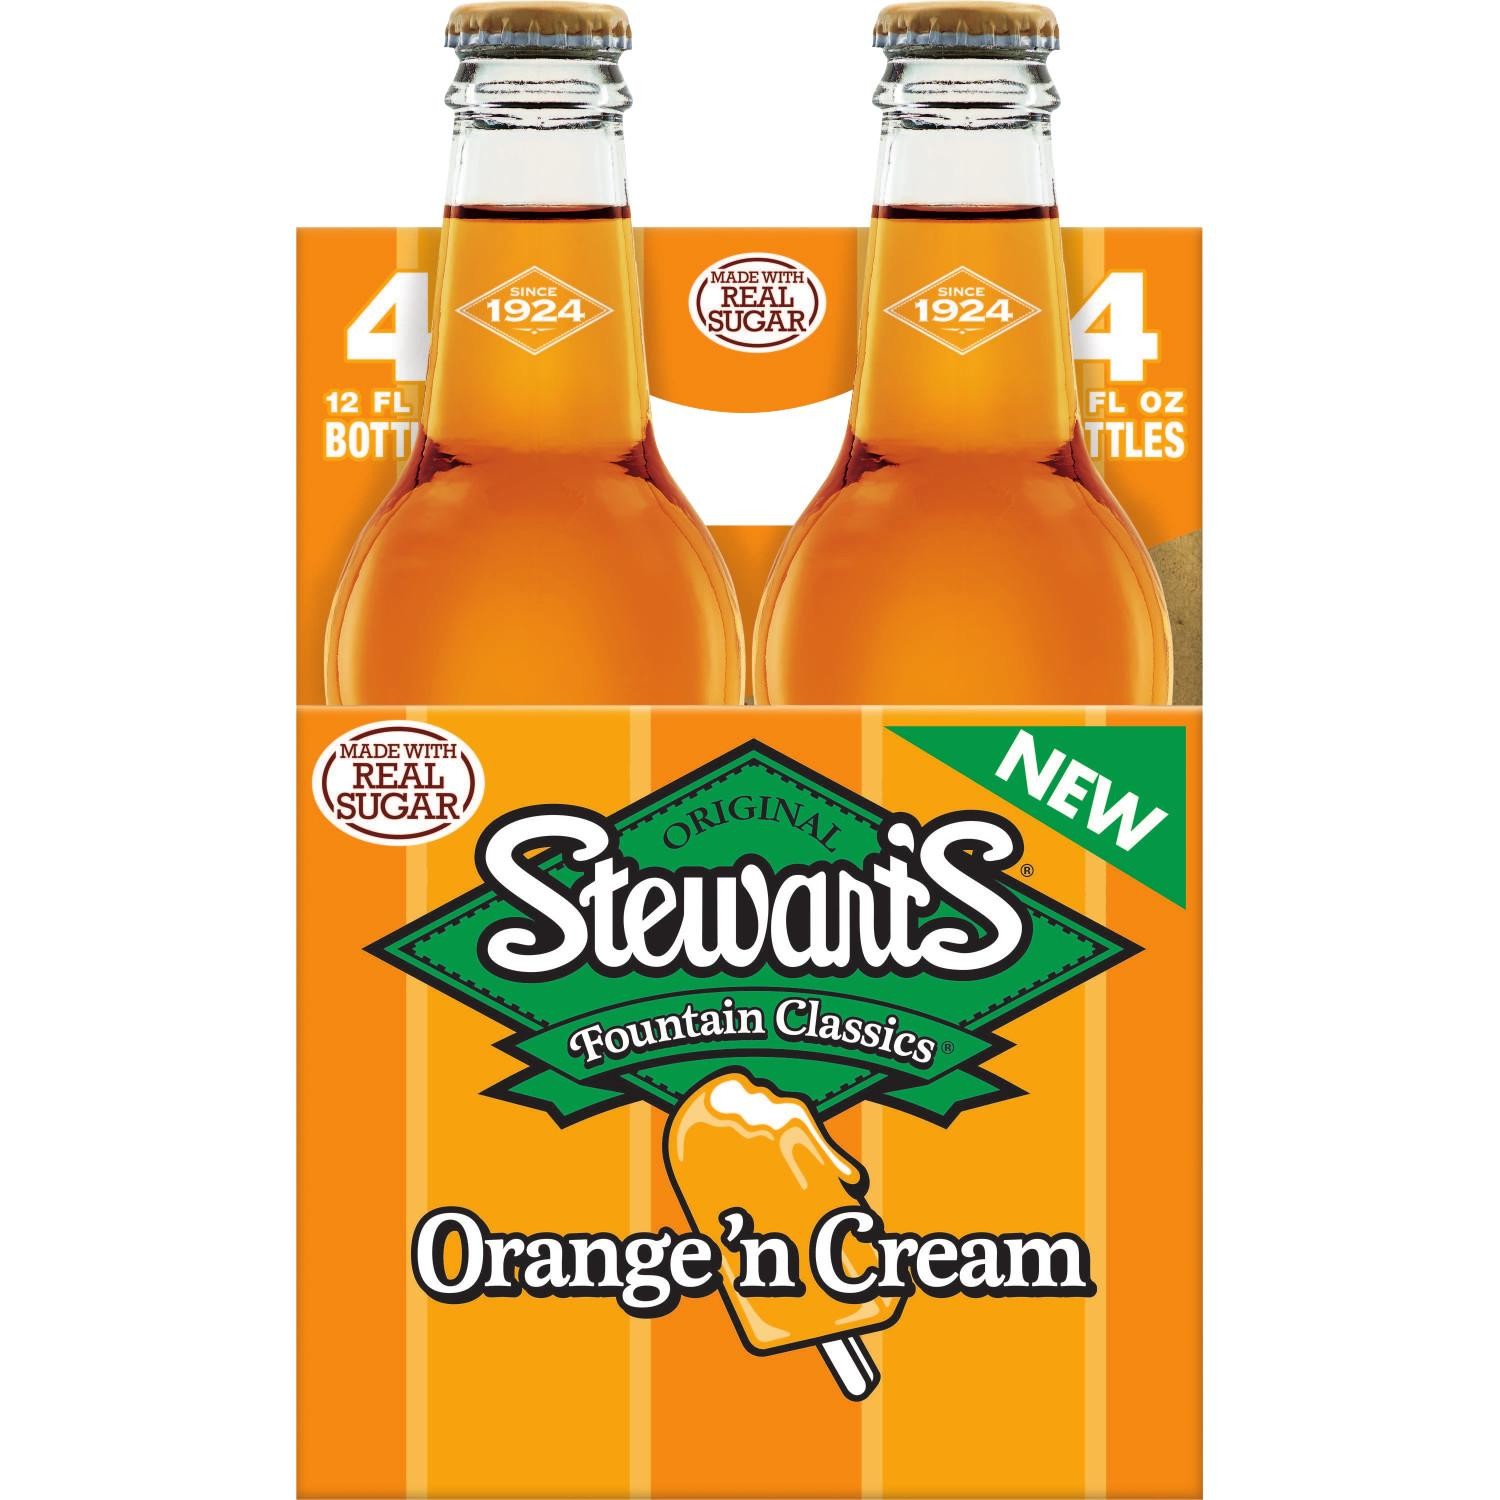 Stewart’s Fountain Classics Orange N’ Cream